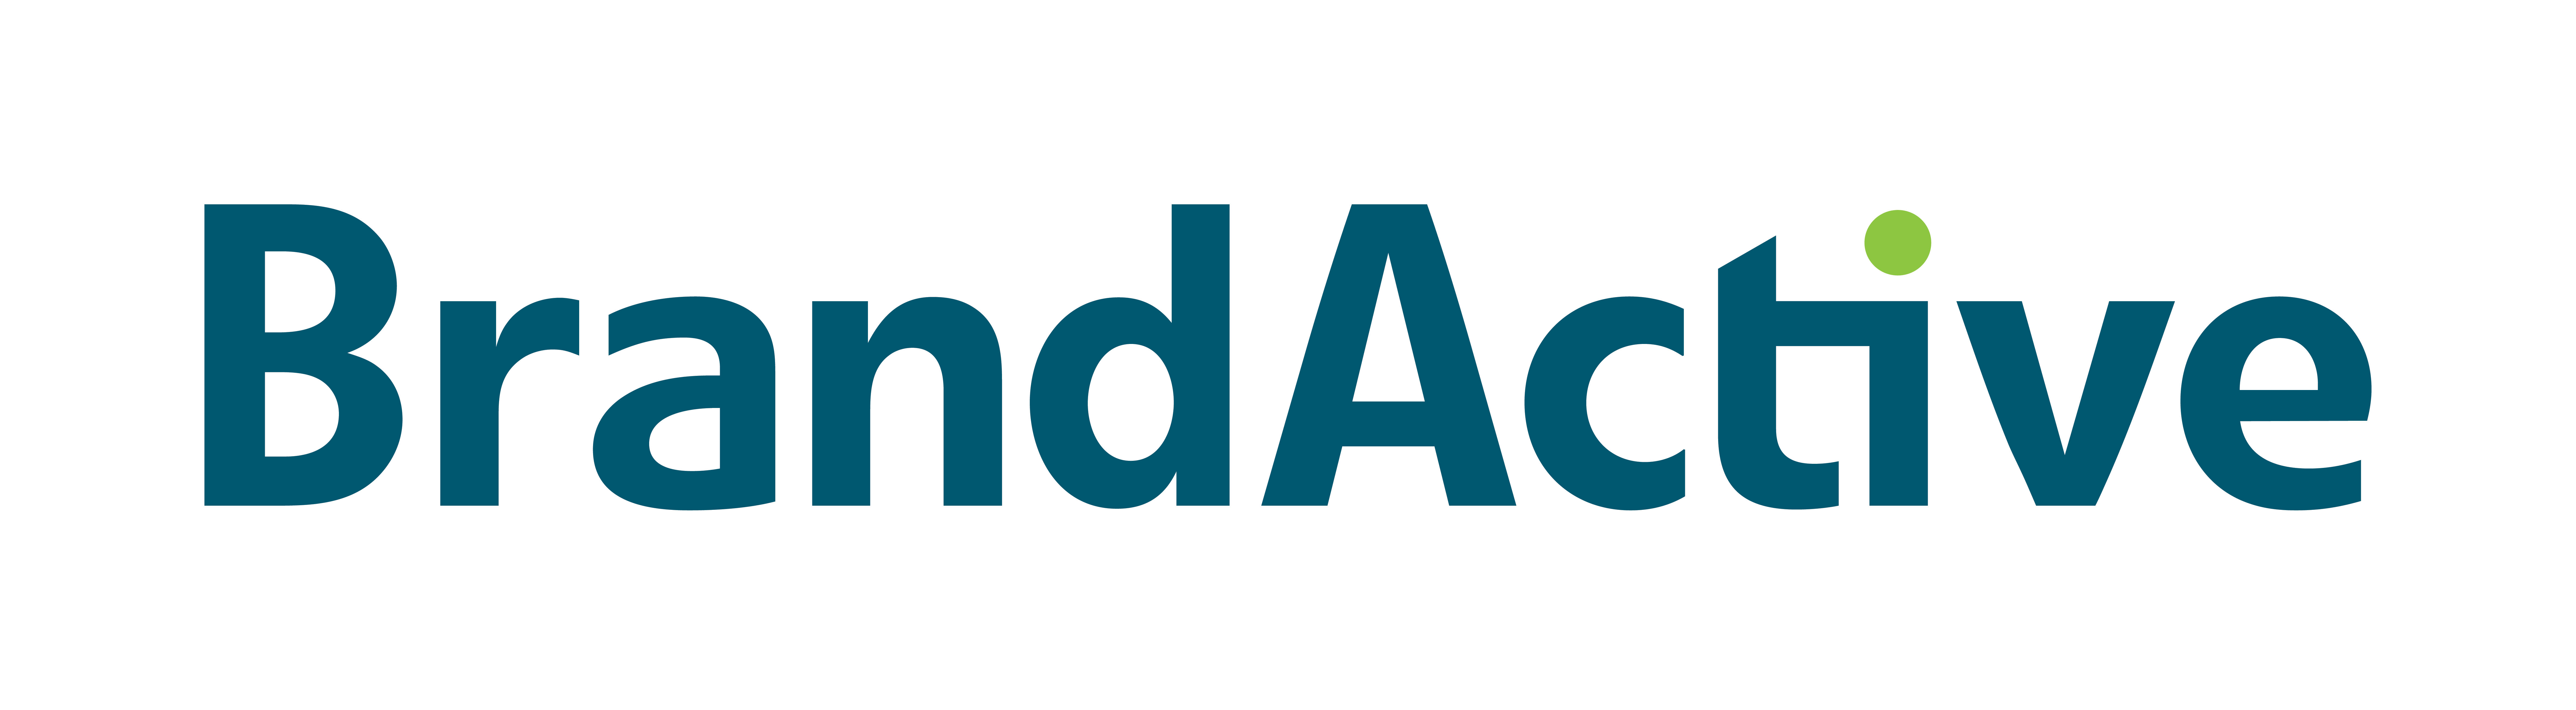 Picture of BrandActive logo